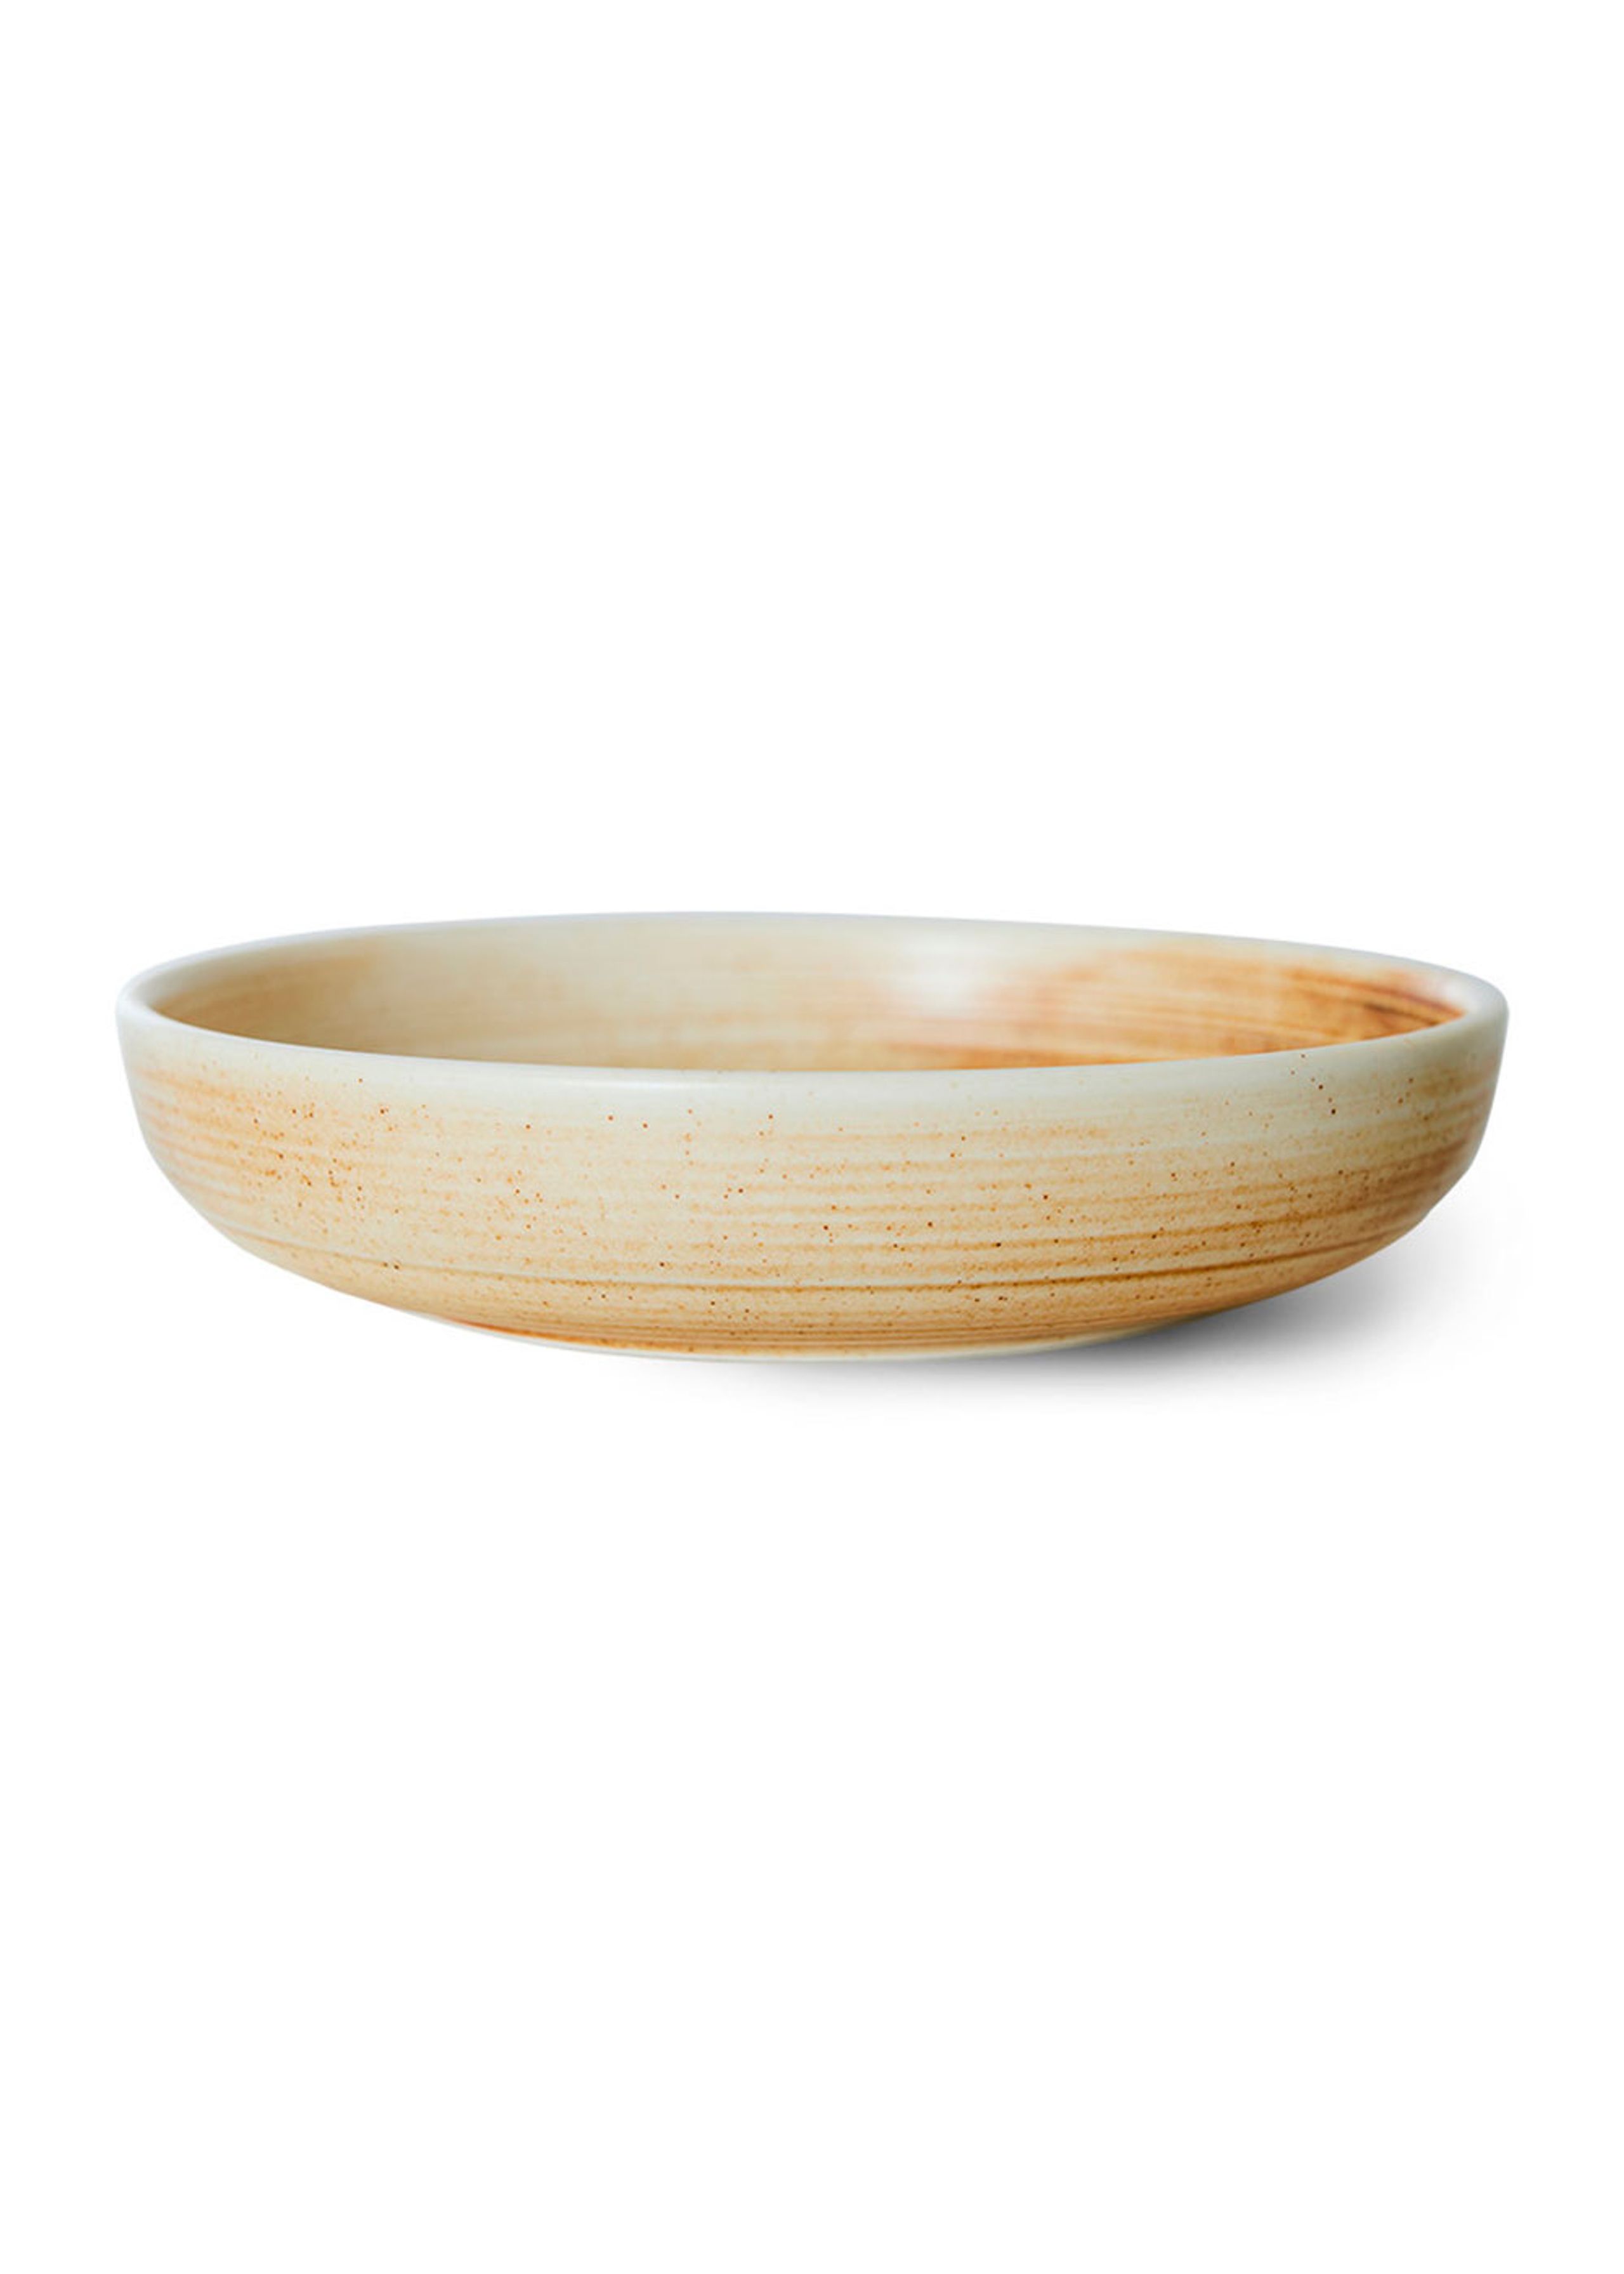 HKLiving - Tallerken - Chef Ceramics - Deep Plate, Large - Rustic Cream/Brown